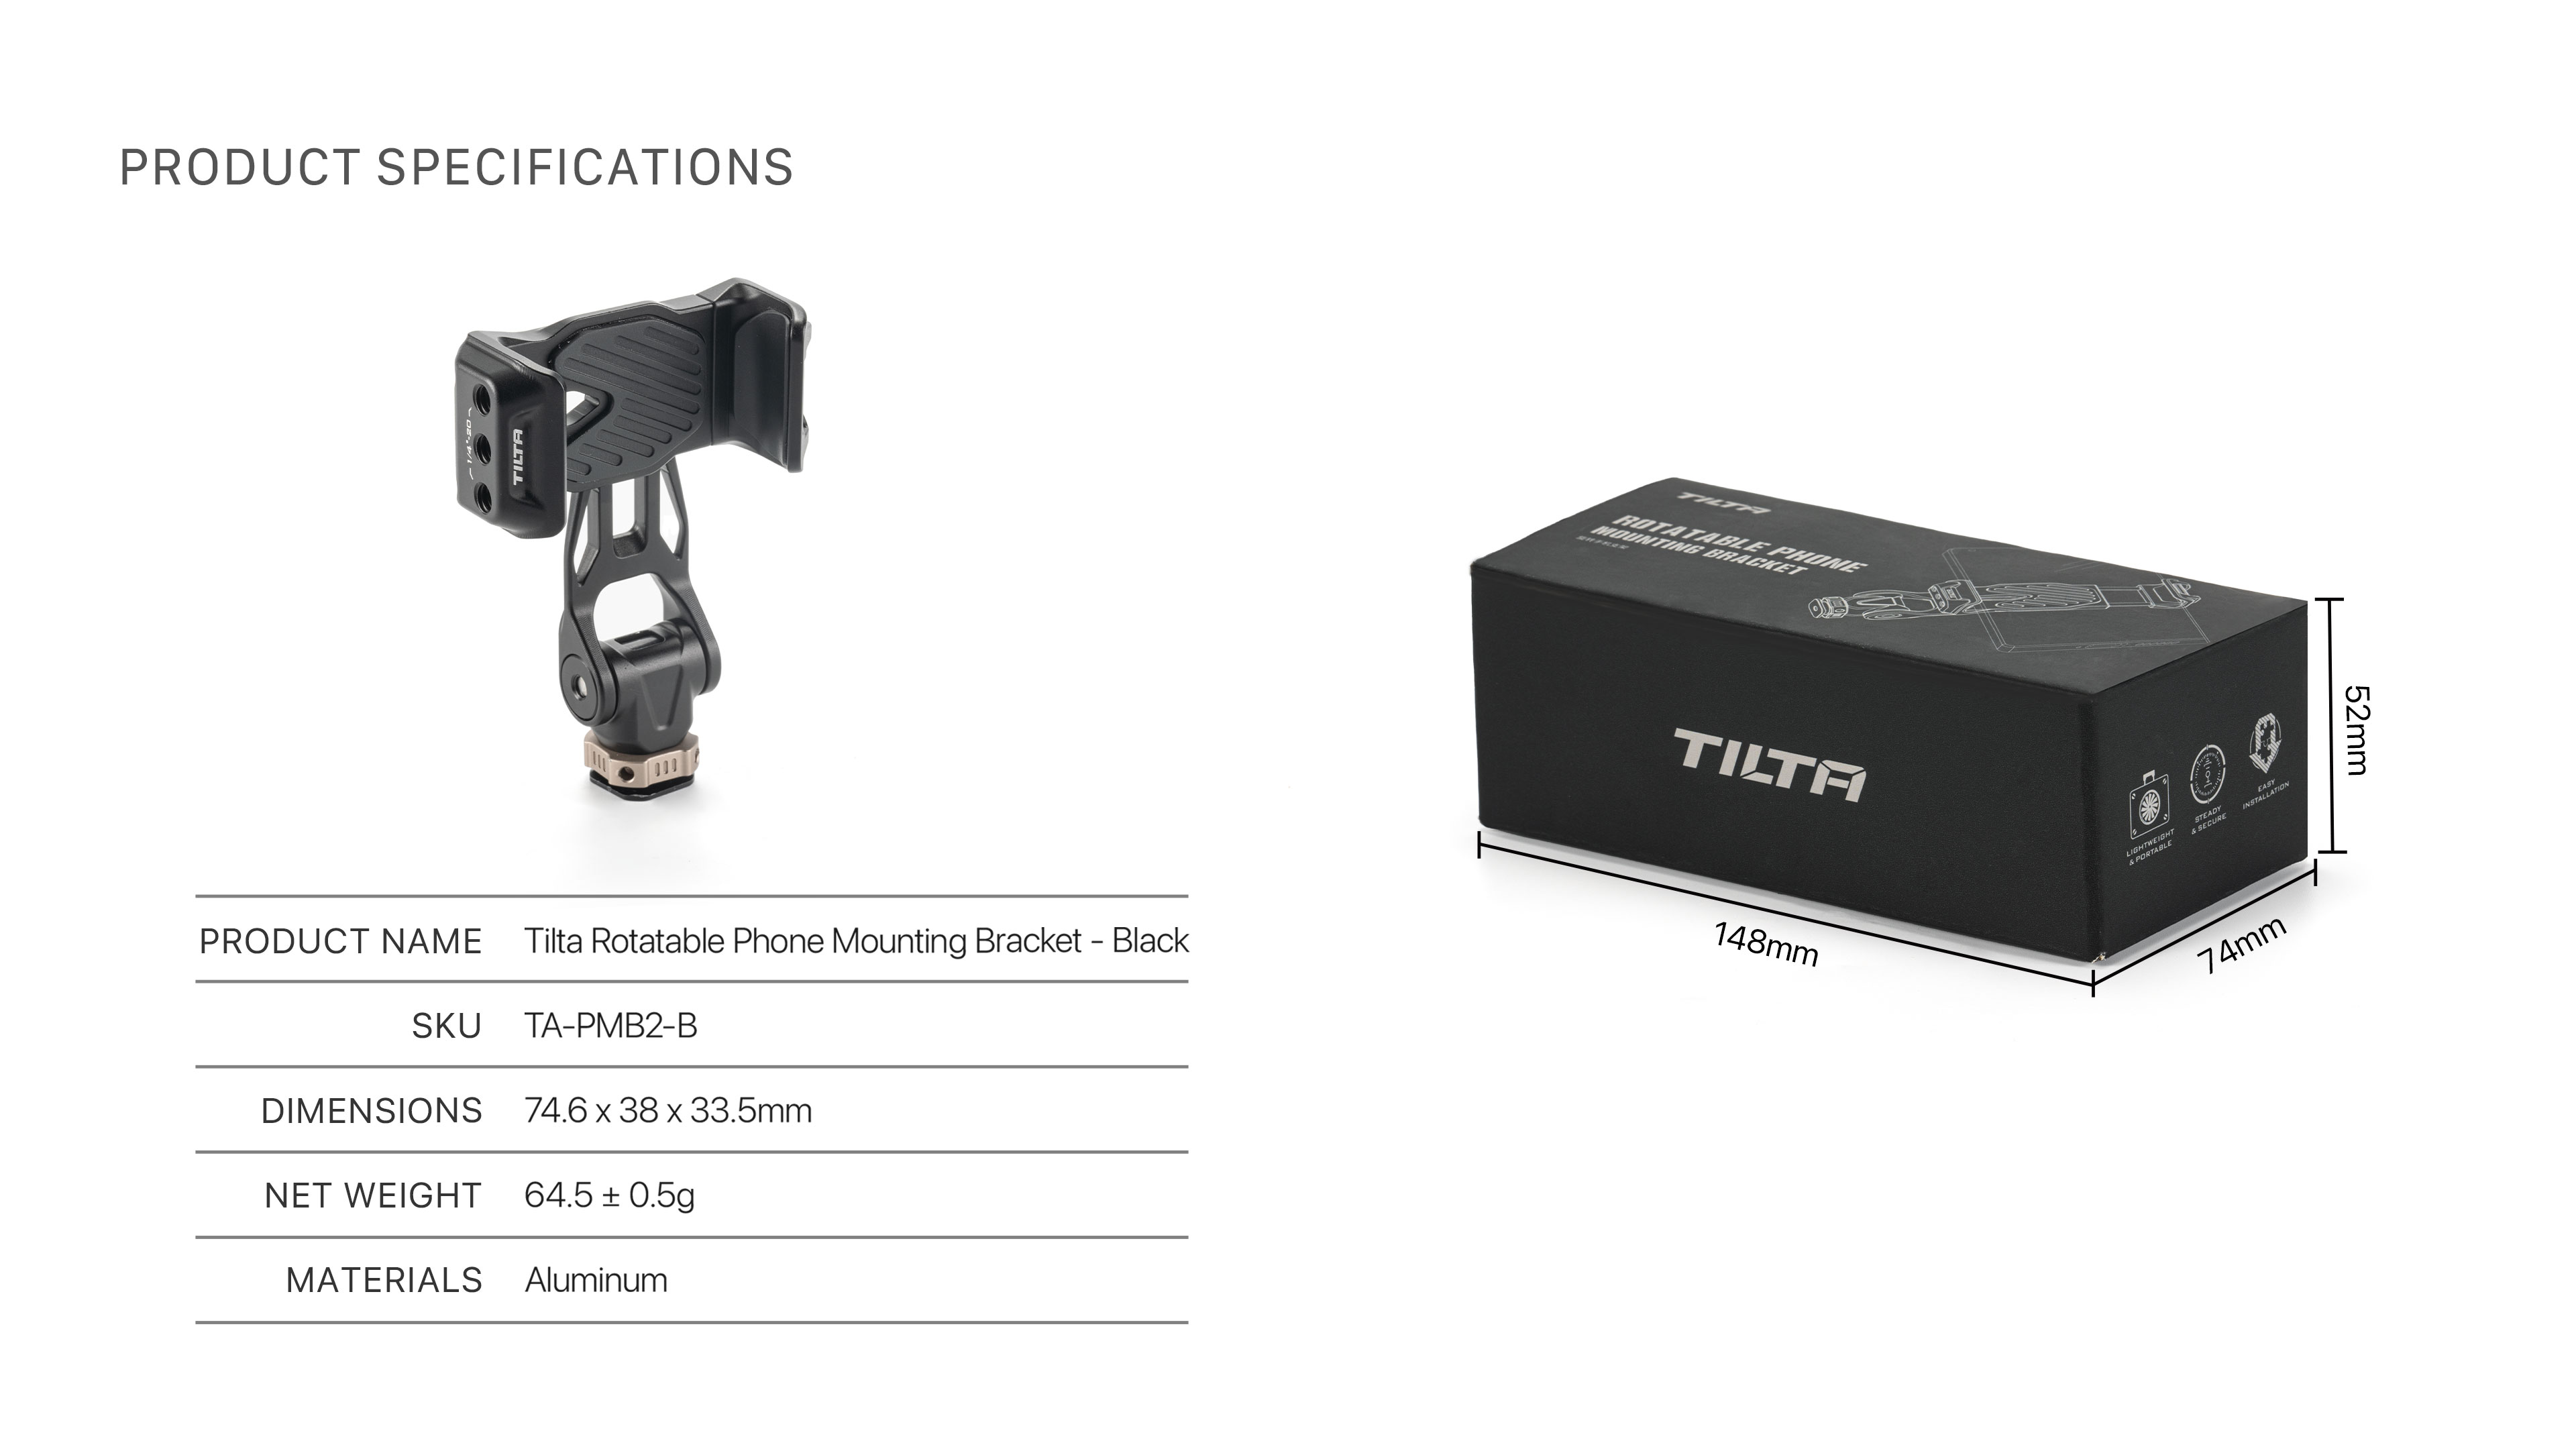 Tilta Rotatable Phone Mounting Bracket - Black